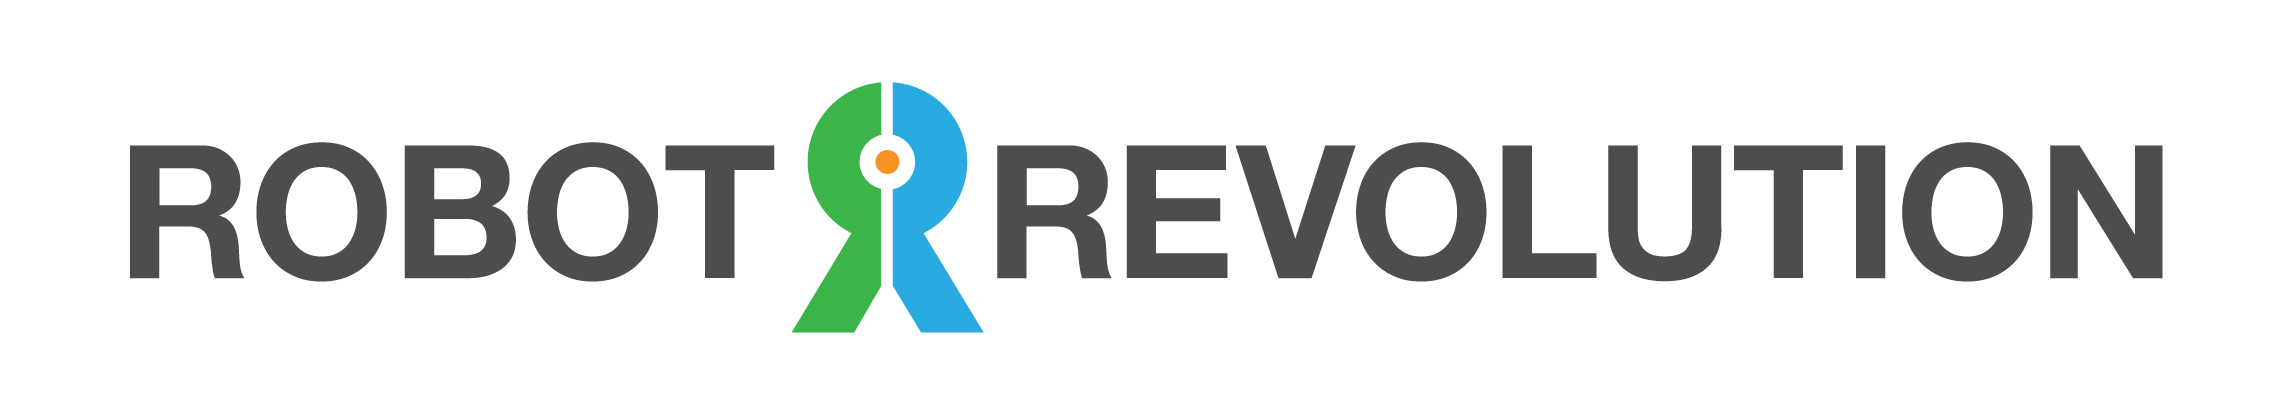 Robot Revolution Logo